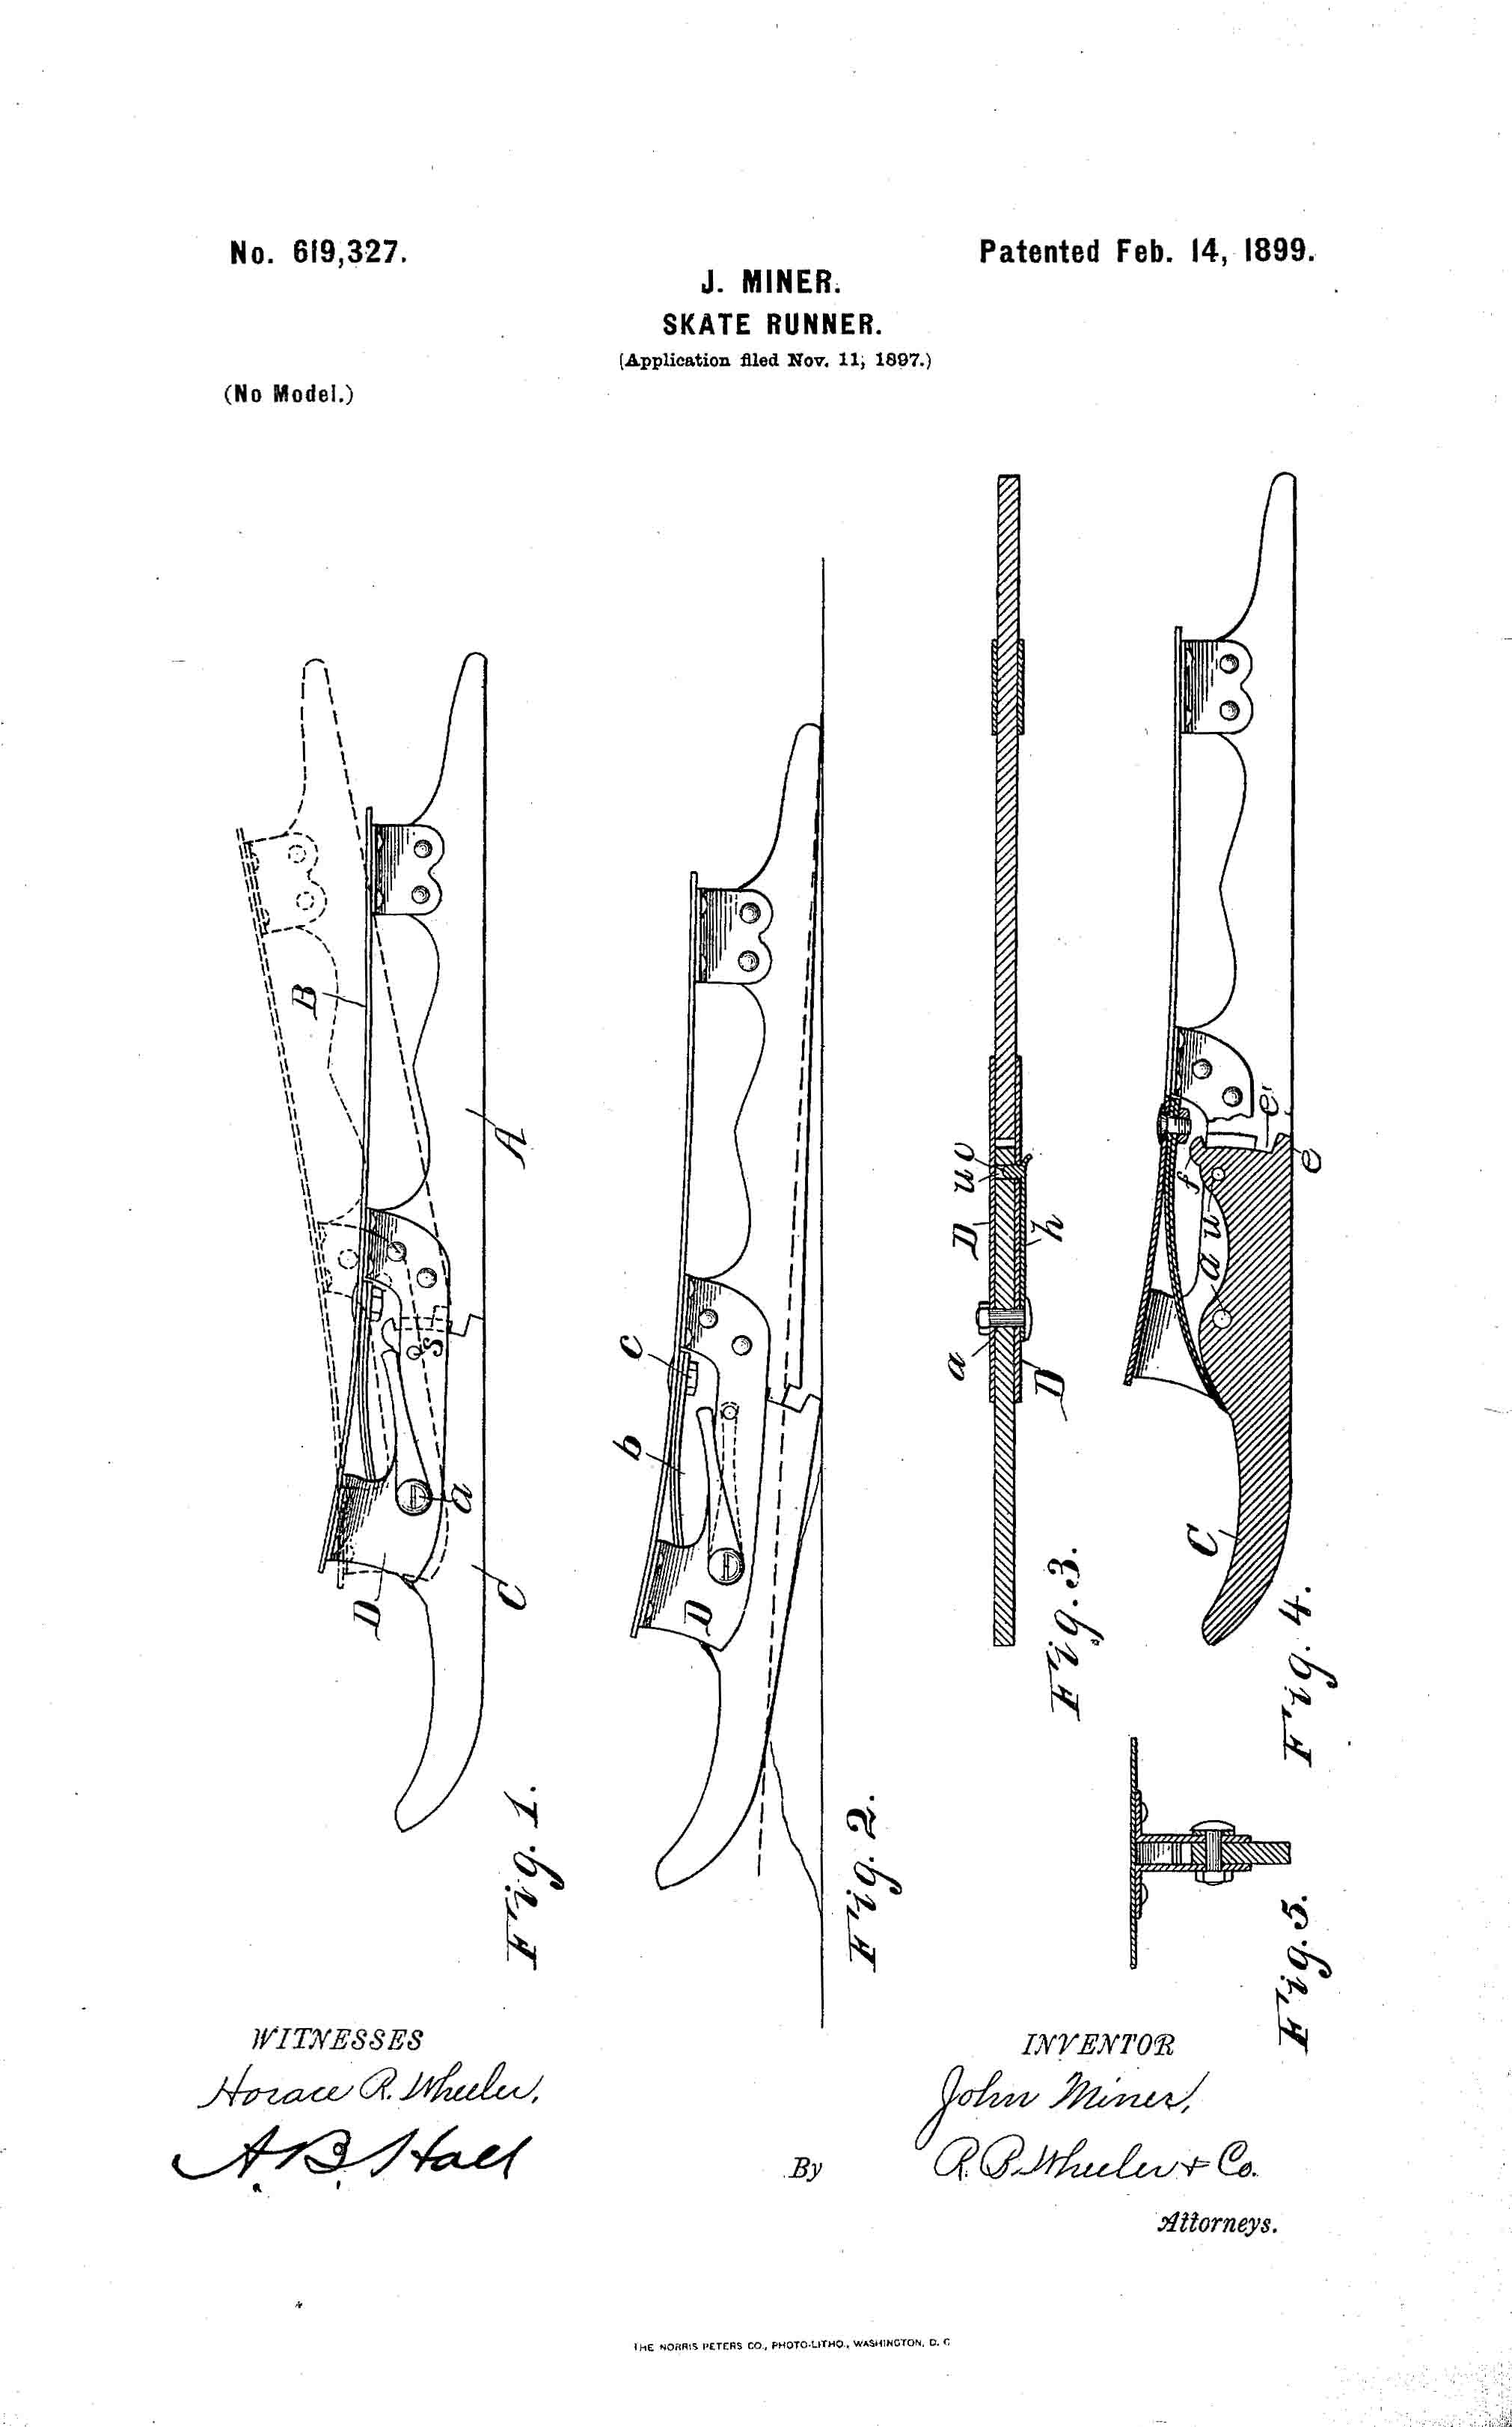 1899 patent drawing for J. Miner Skate Runners